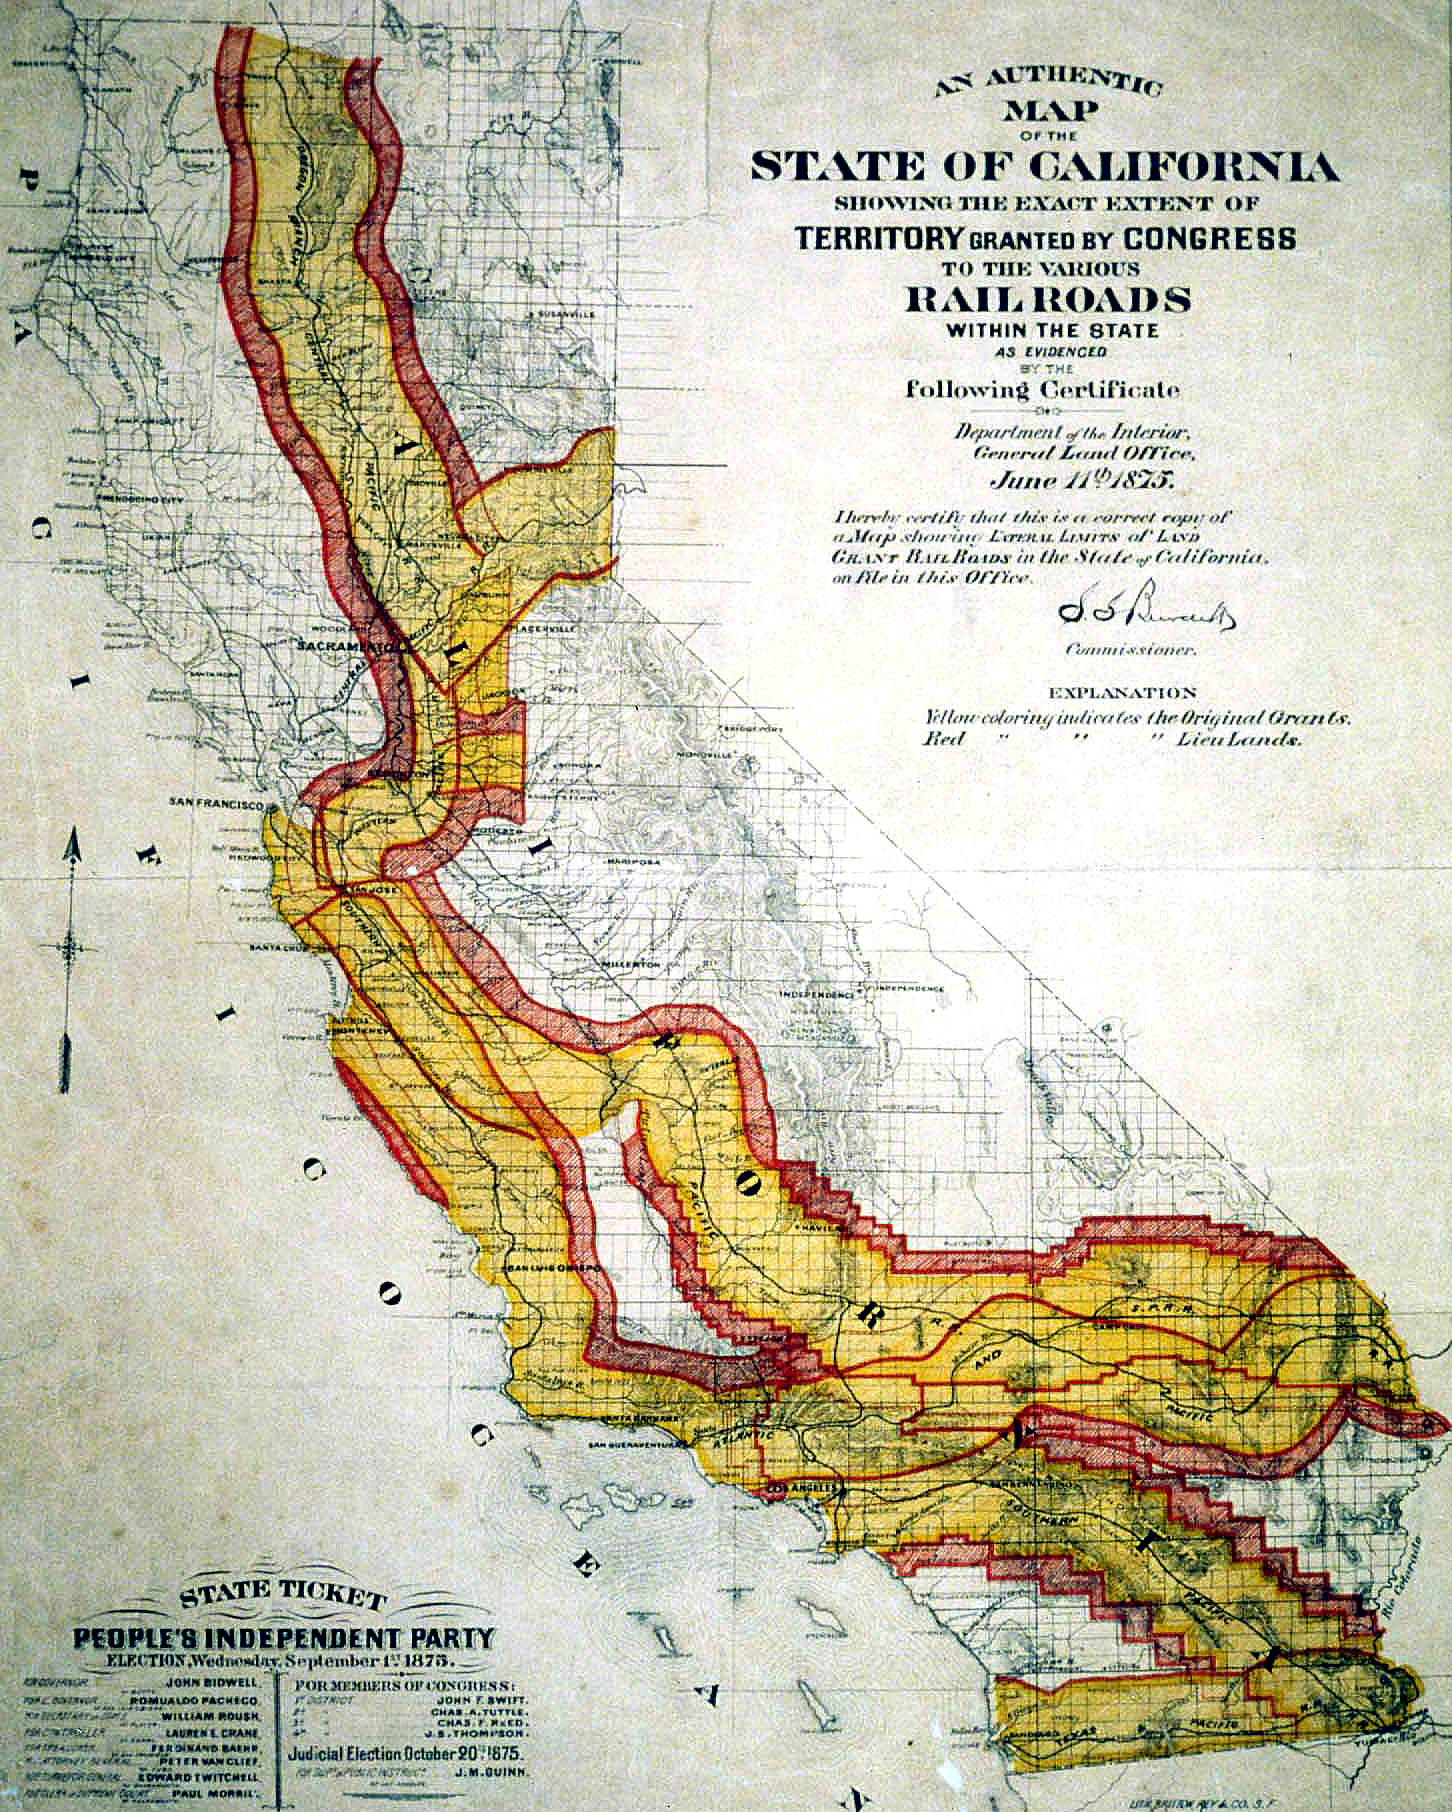 Railroad lands in California, 1875